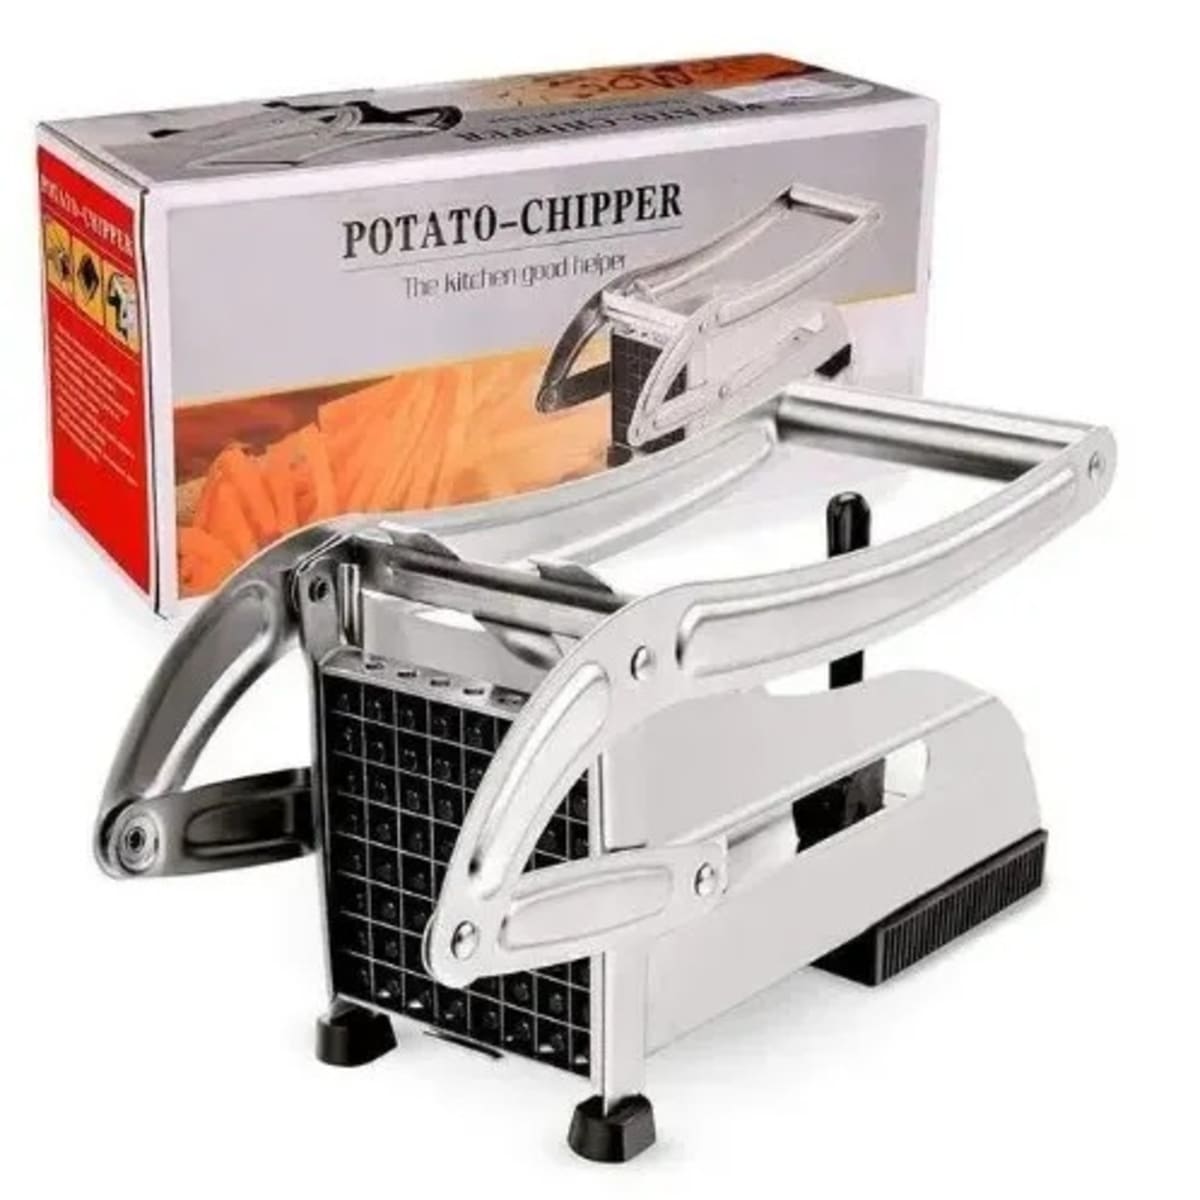 Potato Chipper - Stainless Steel